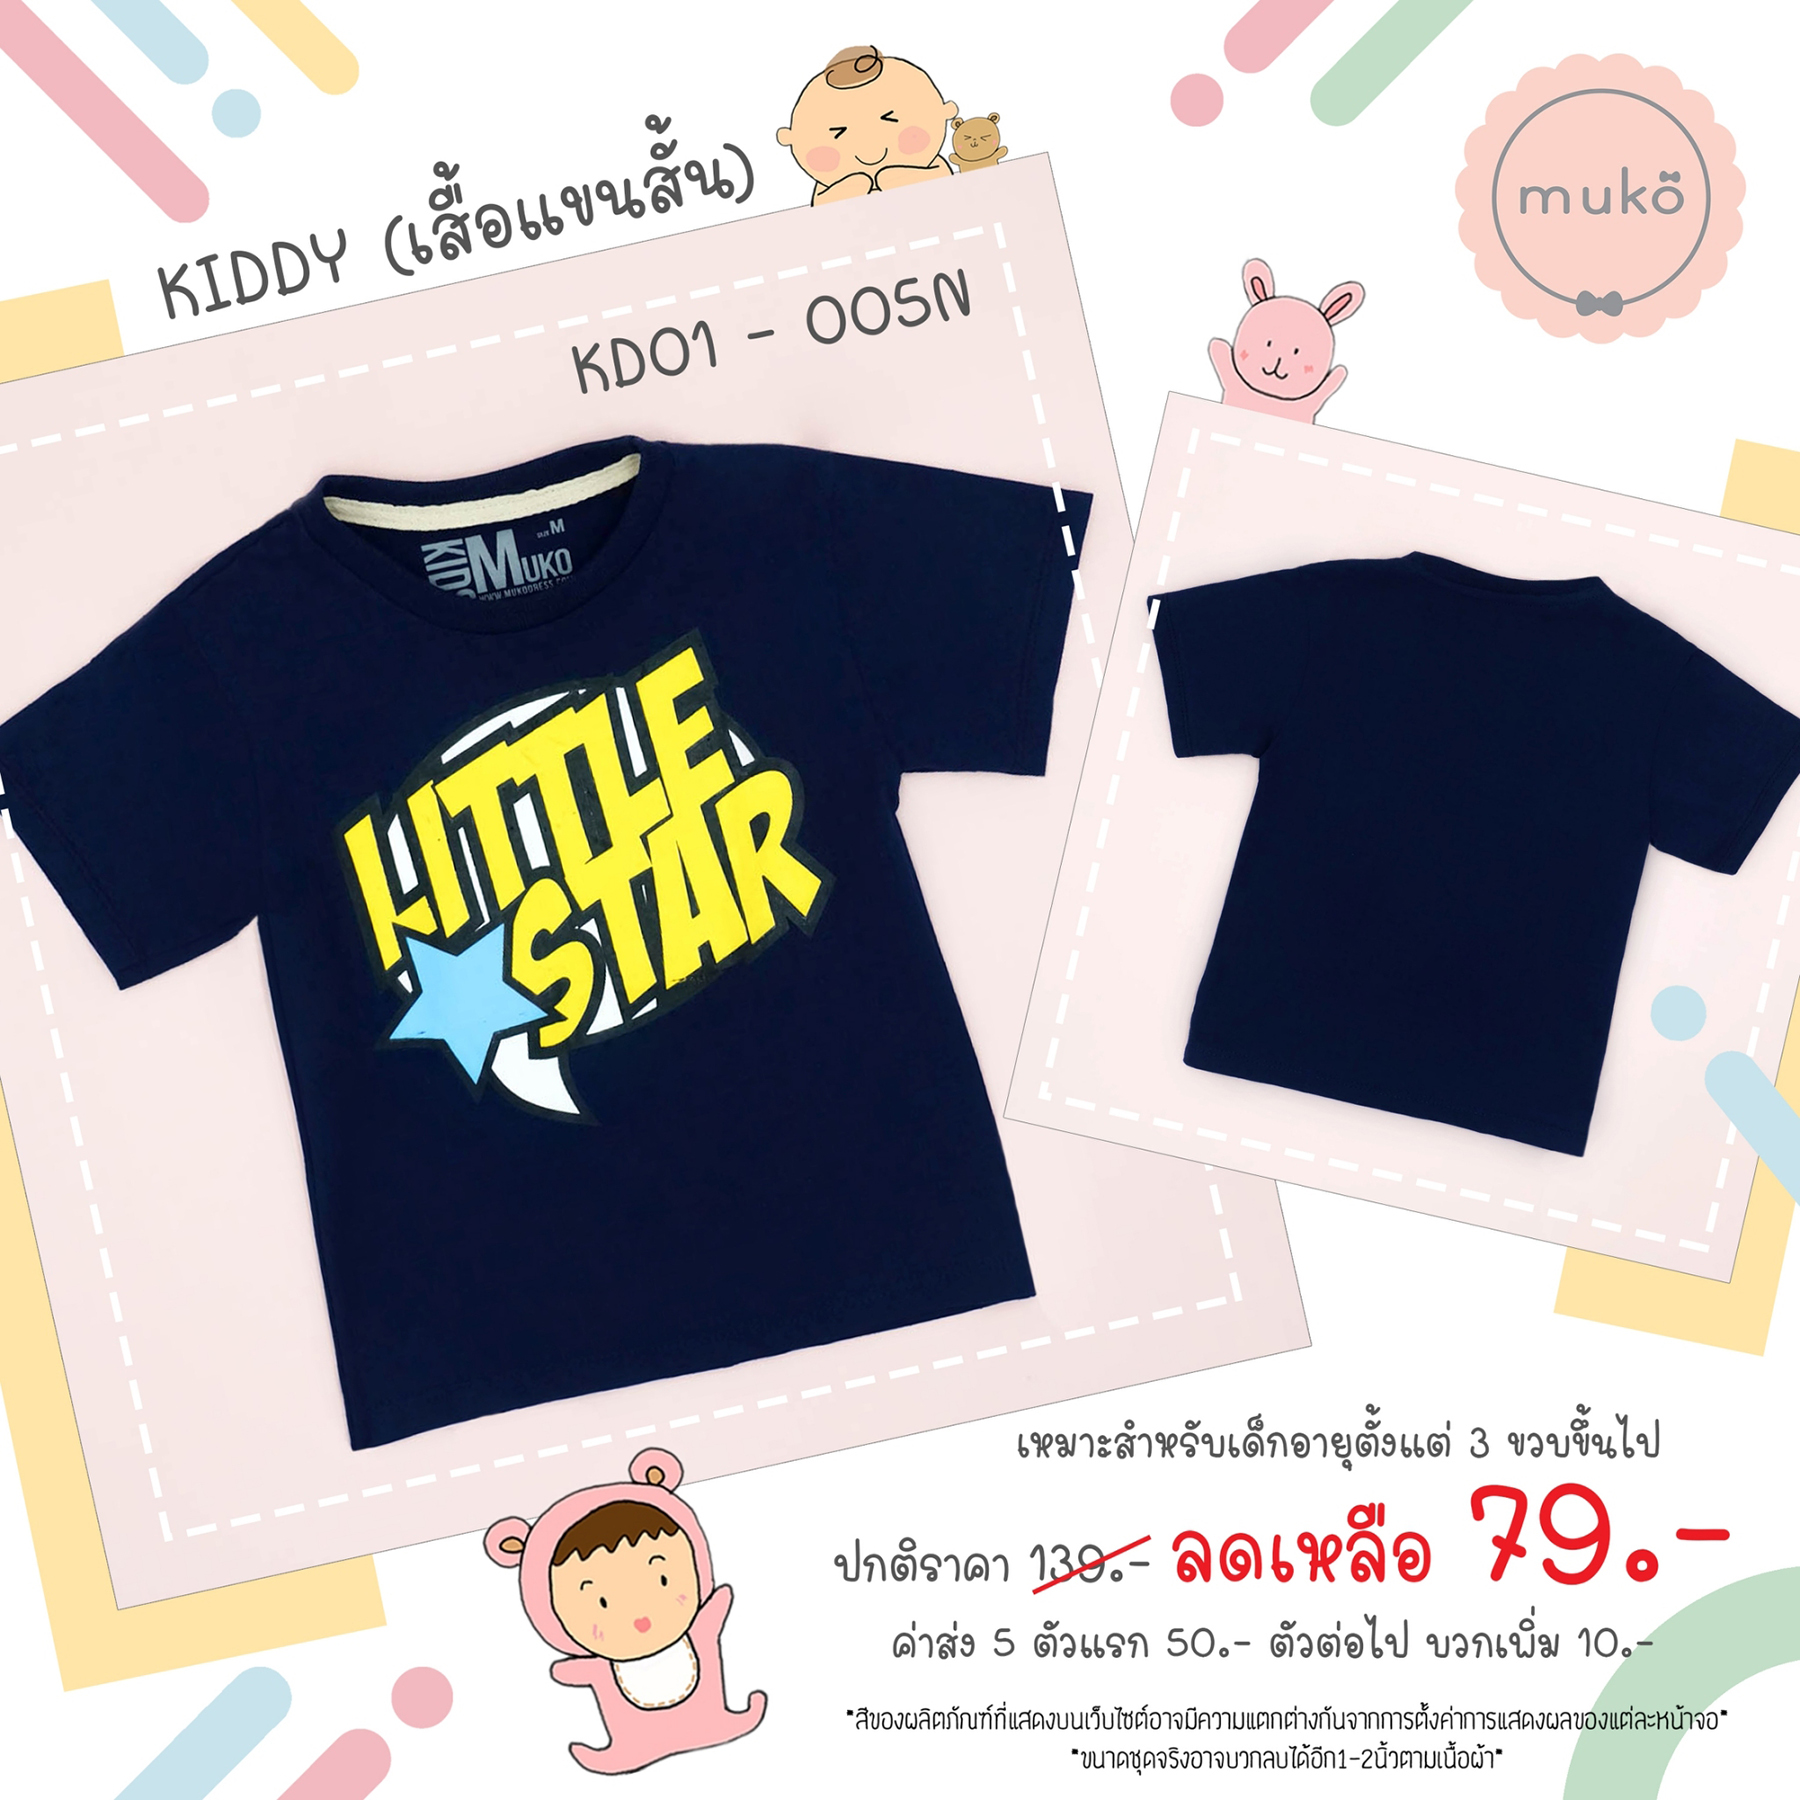 Muko Kiddy เสื้อเด็กเล็ก (แขนสั้น) Size S KD01-005N S ลาย Little Star สีกรม